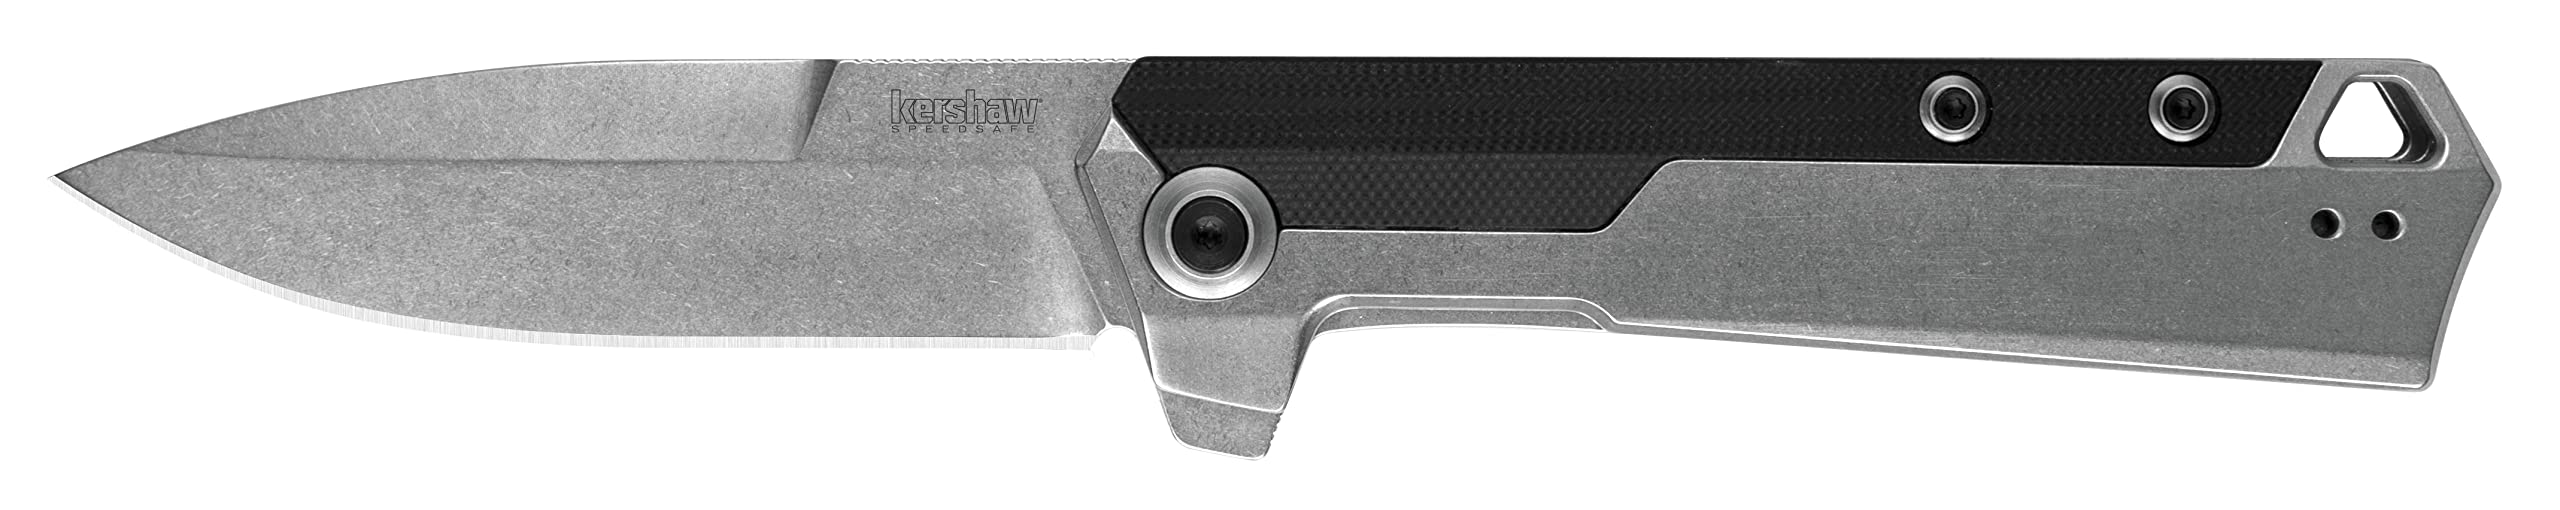 Kershaw Oblivion Pocket Knife, 3.5 Inch - $28.85 + F/S - Amazon